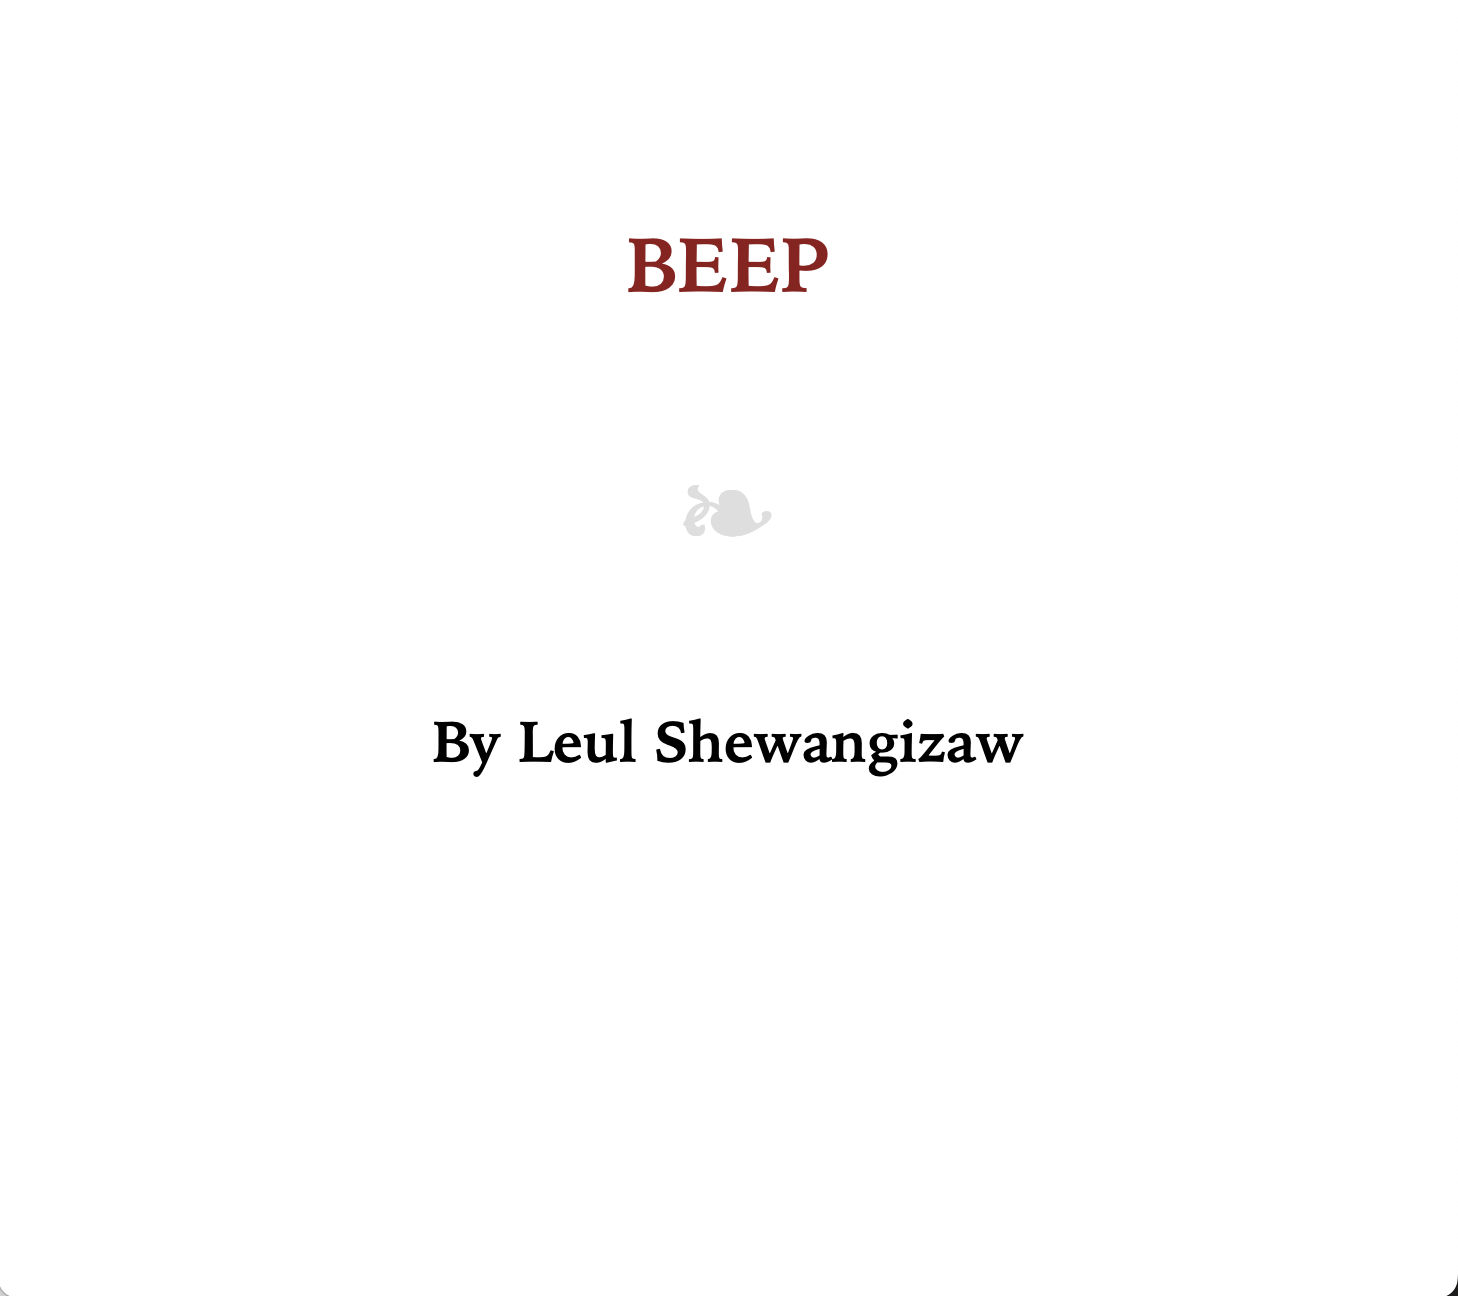 BEEP book cover by leul shewangizaw